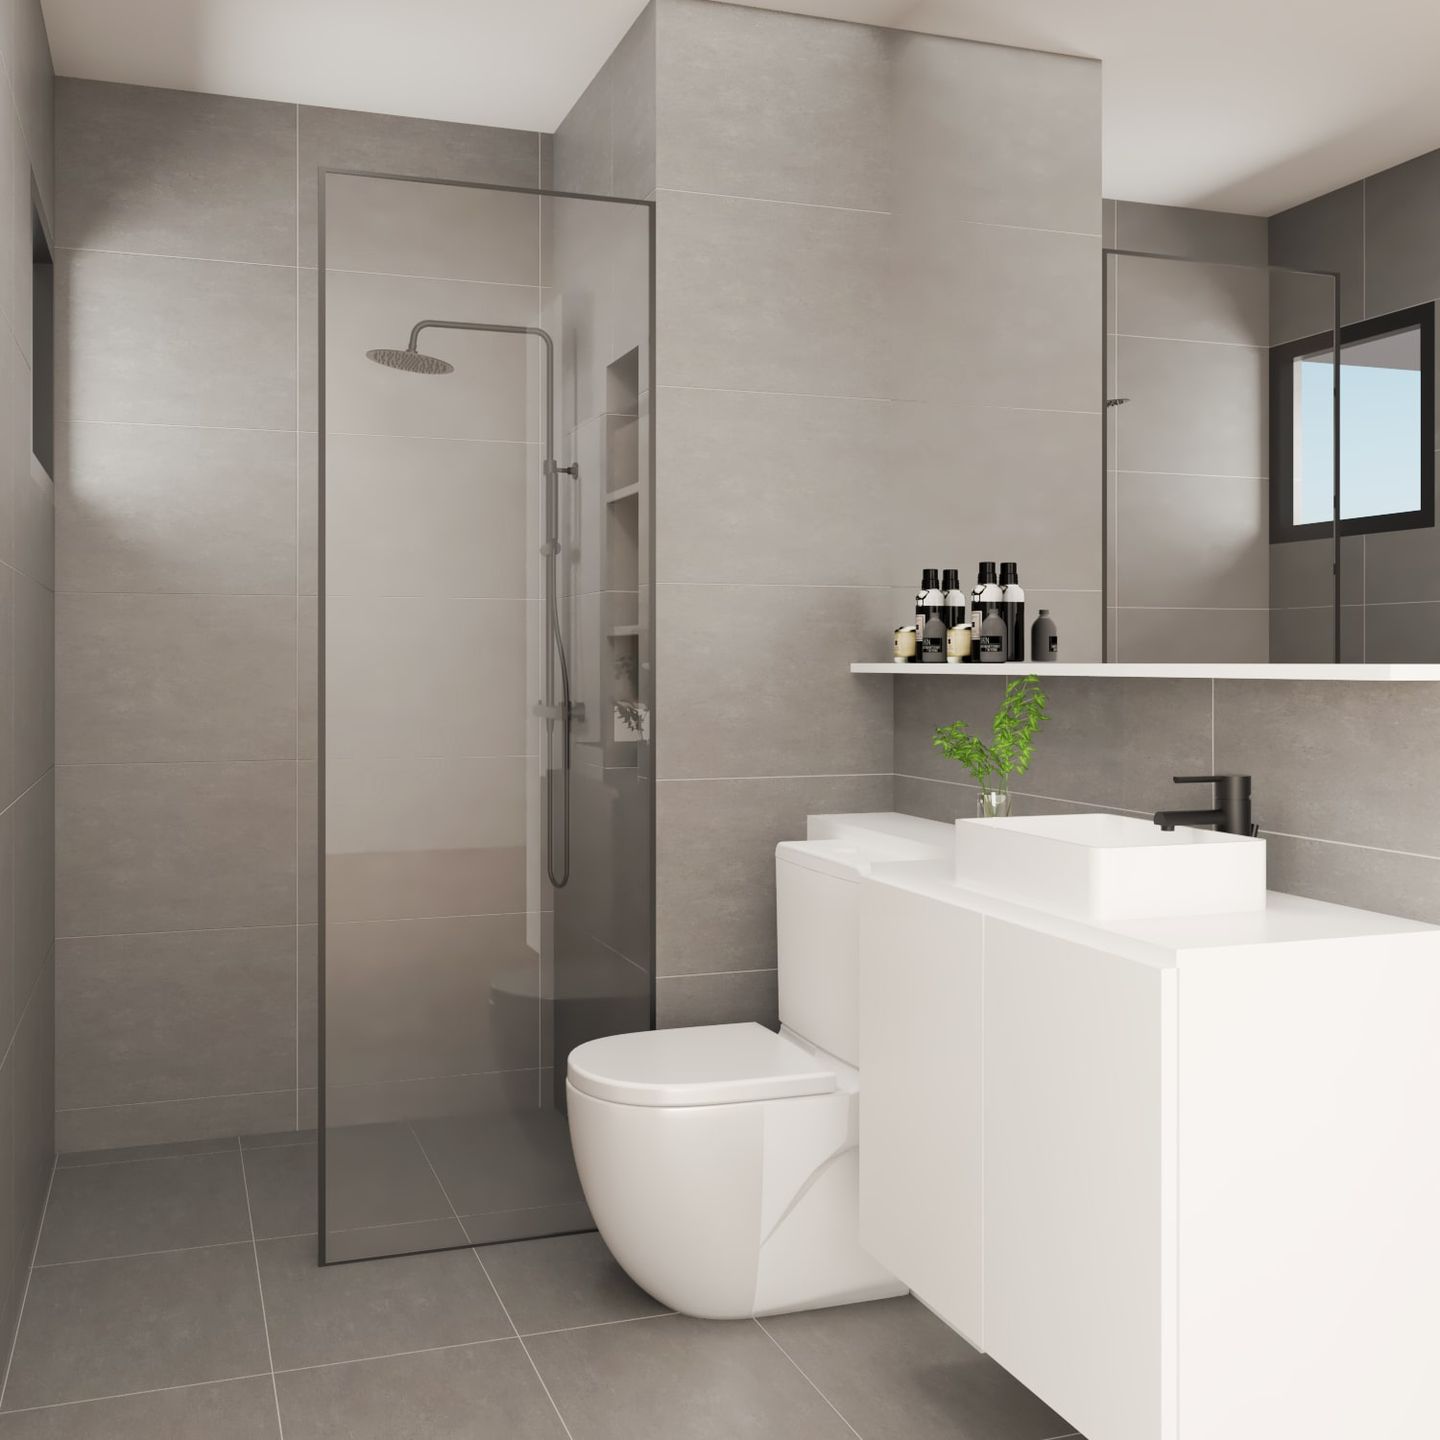 All-White Bathroom Interior Design - Livspace